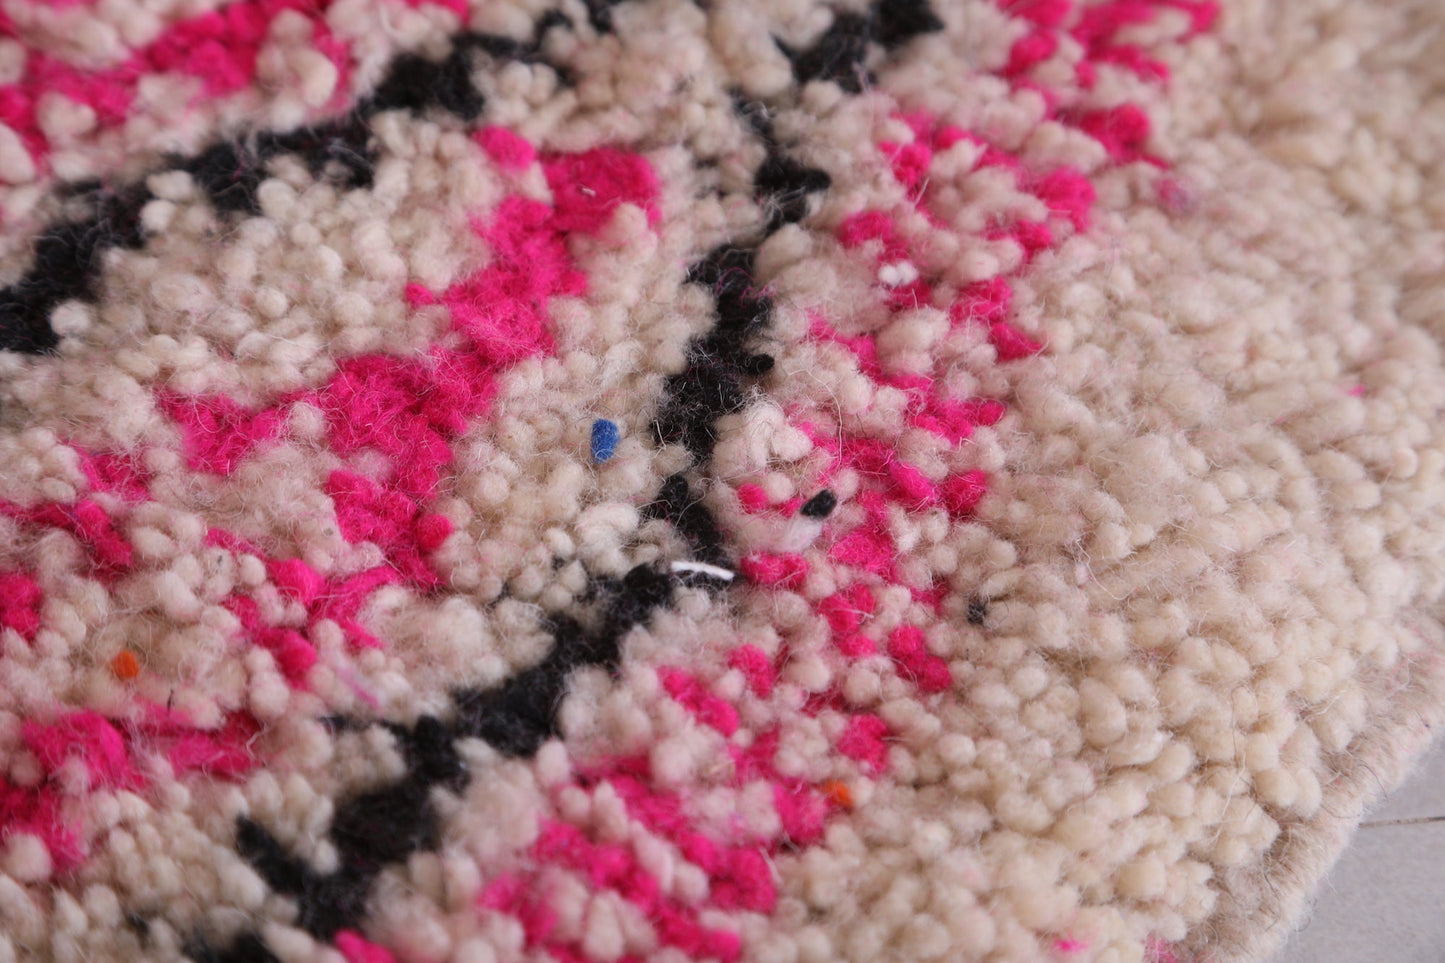 Entryway berber Moroccan rug, custom handmade carpet